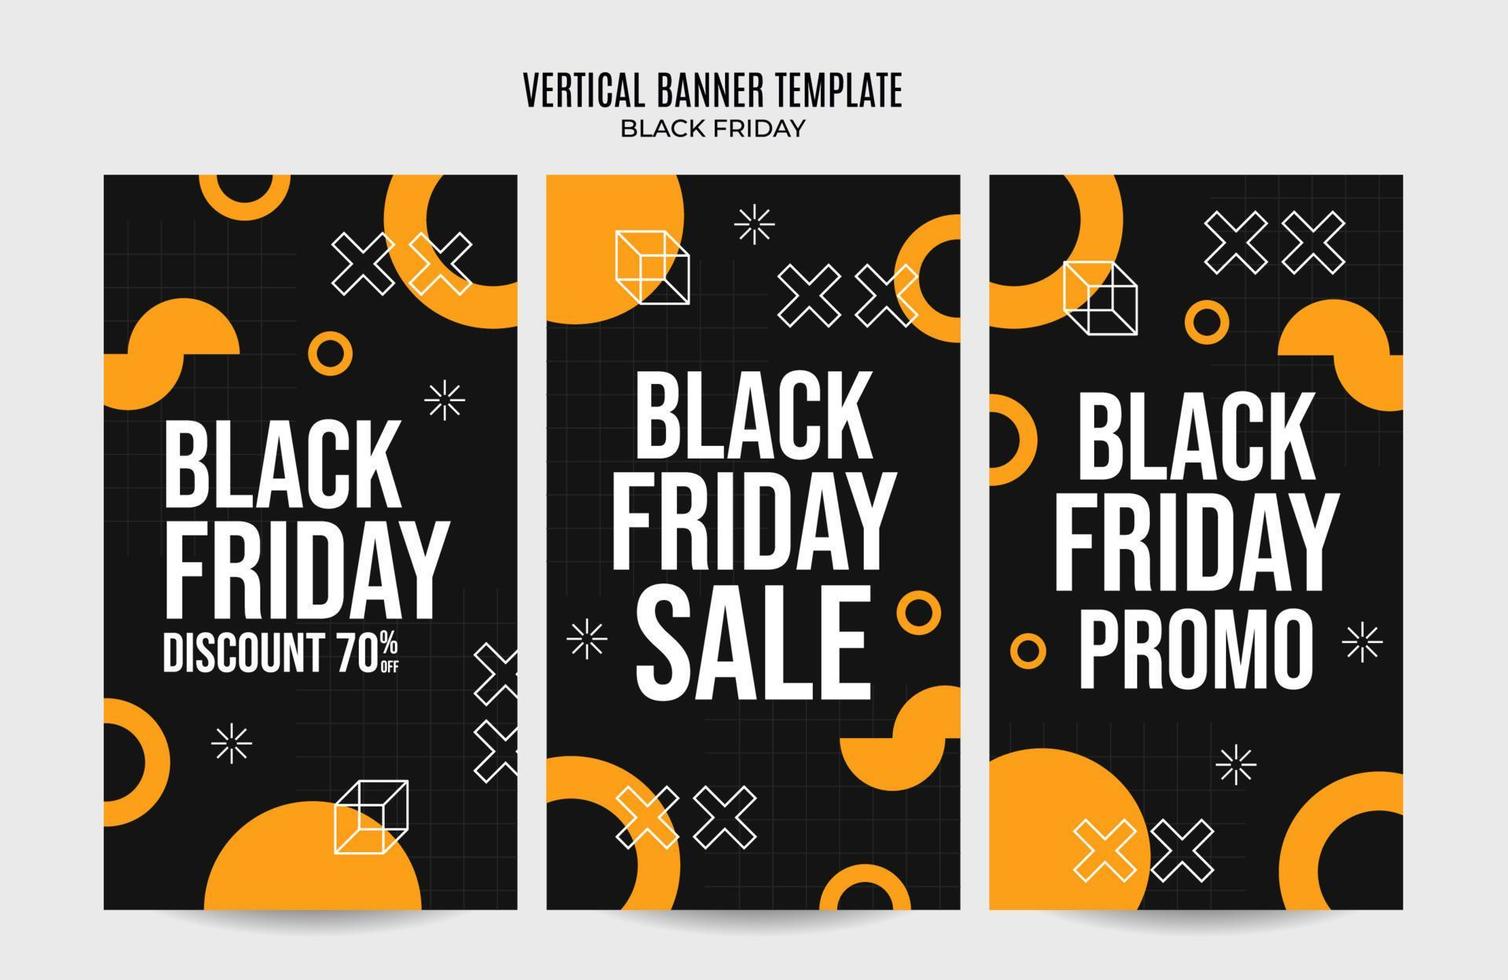 Black Friday sale banner. Social media vector illustration template for website and mobile website development, email and newsletter design, marketing material.